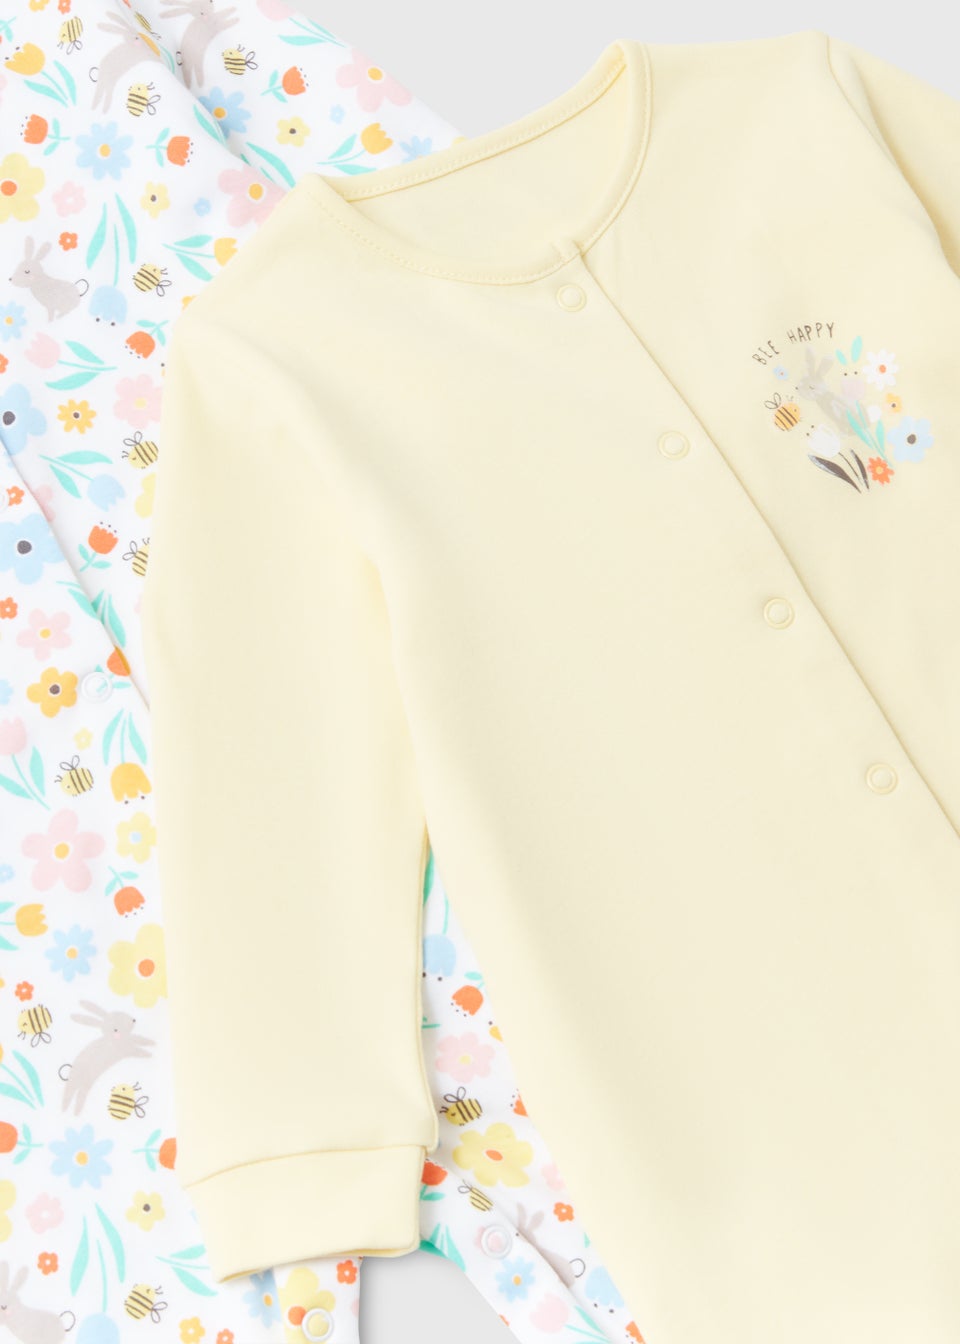 2 Pack Baby Multicoloured Bee Sleepsuits (Newborn-23mths)